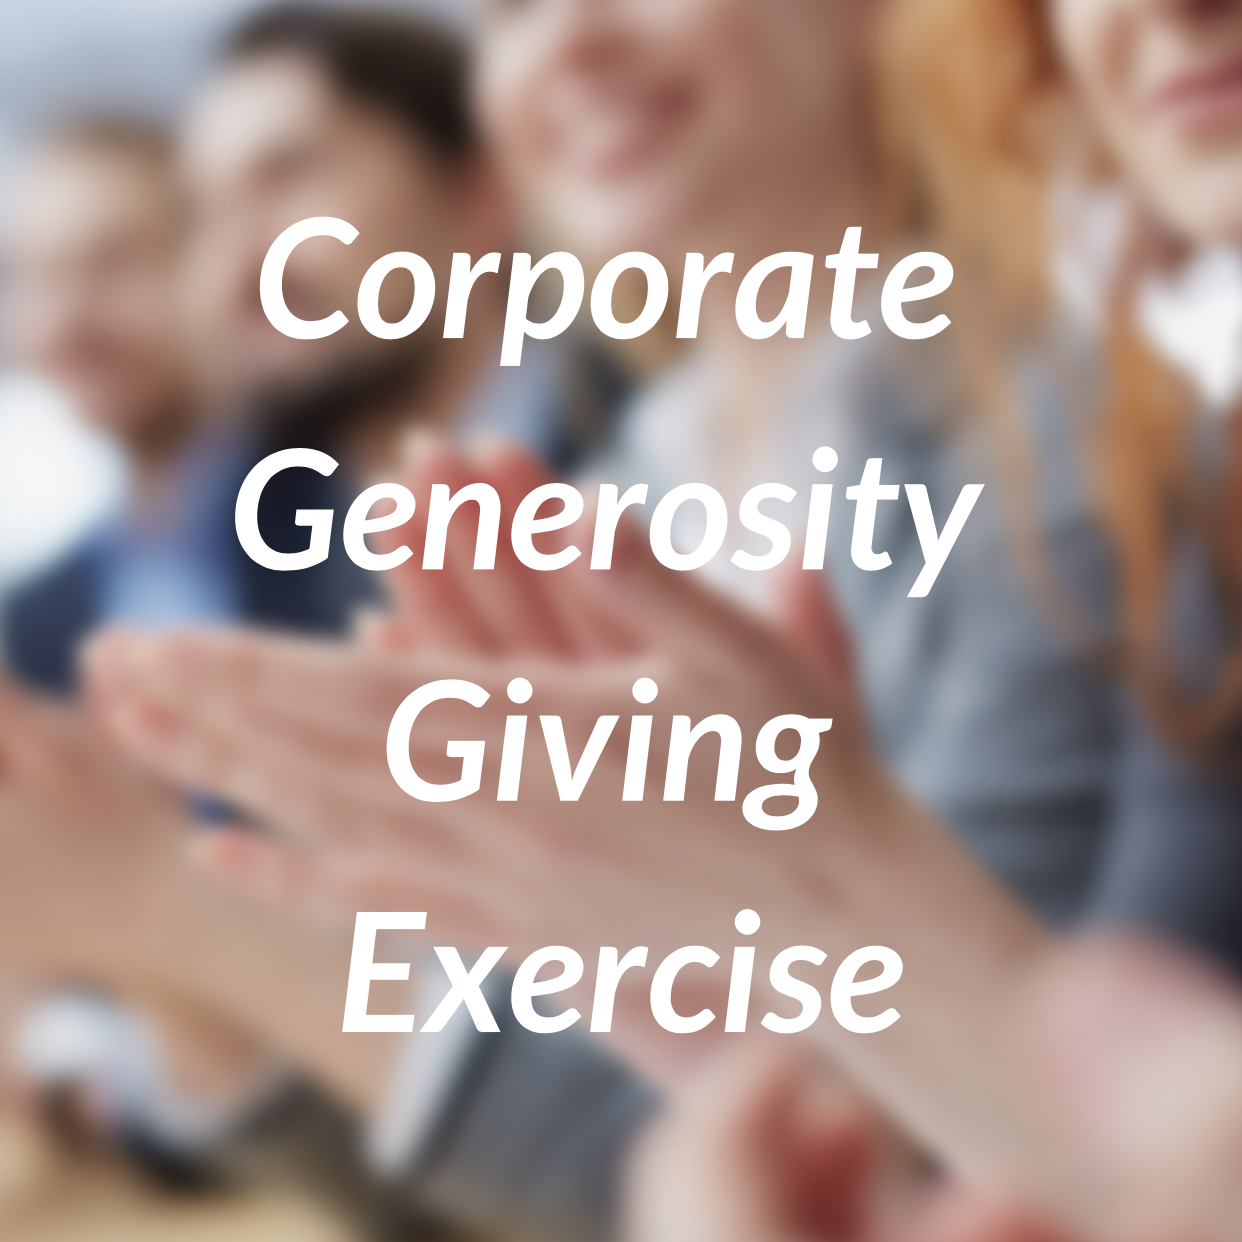 Corporate Generosity Giving Exercise